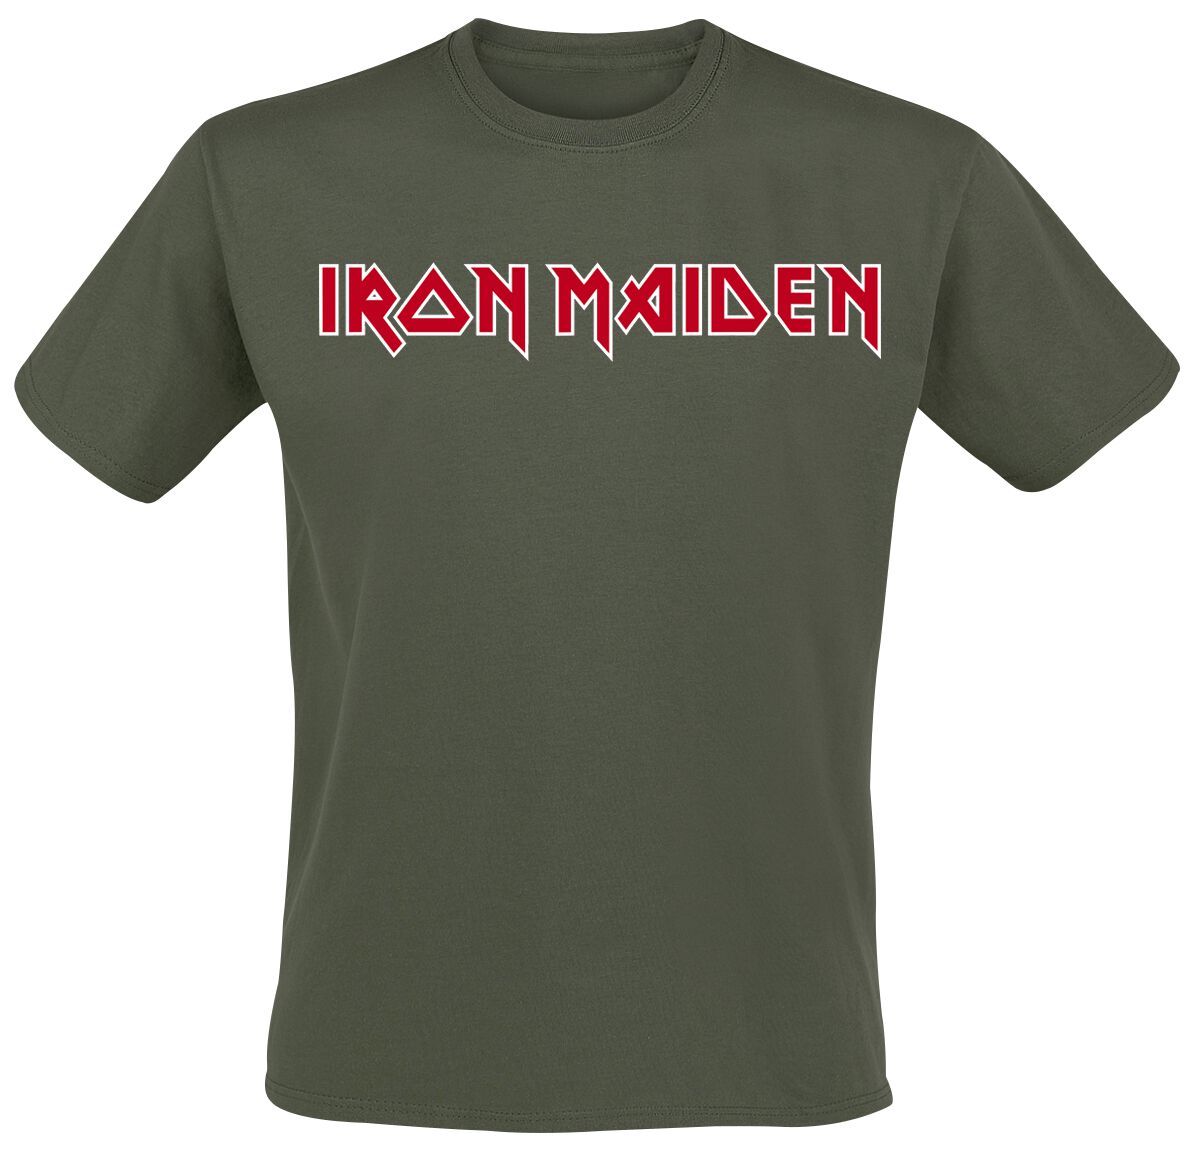 Iron Maiden Logo T-Shirt khaki in S